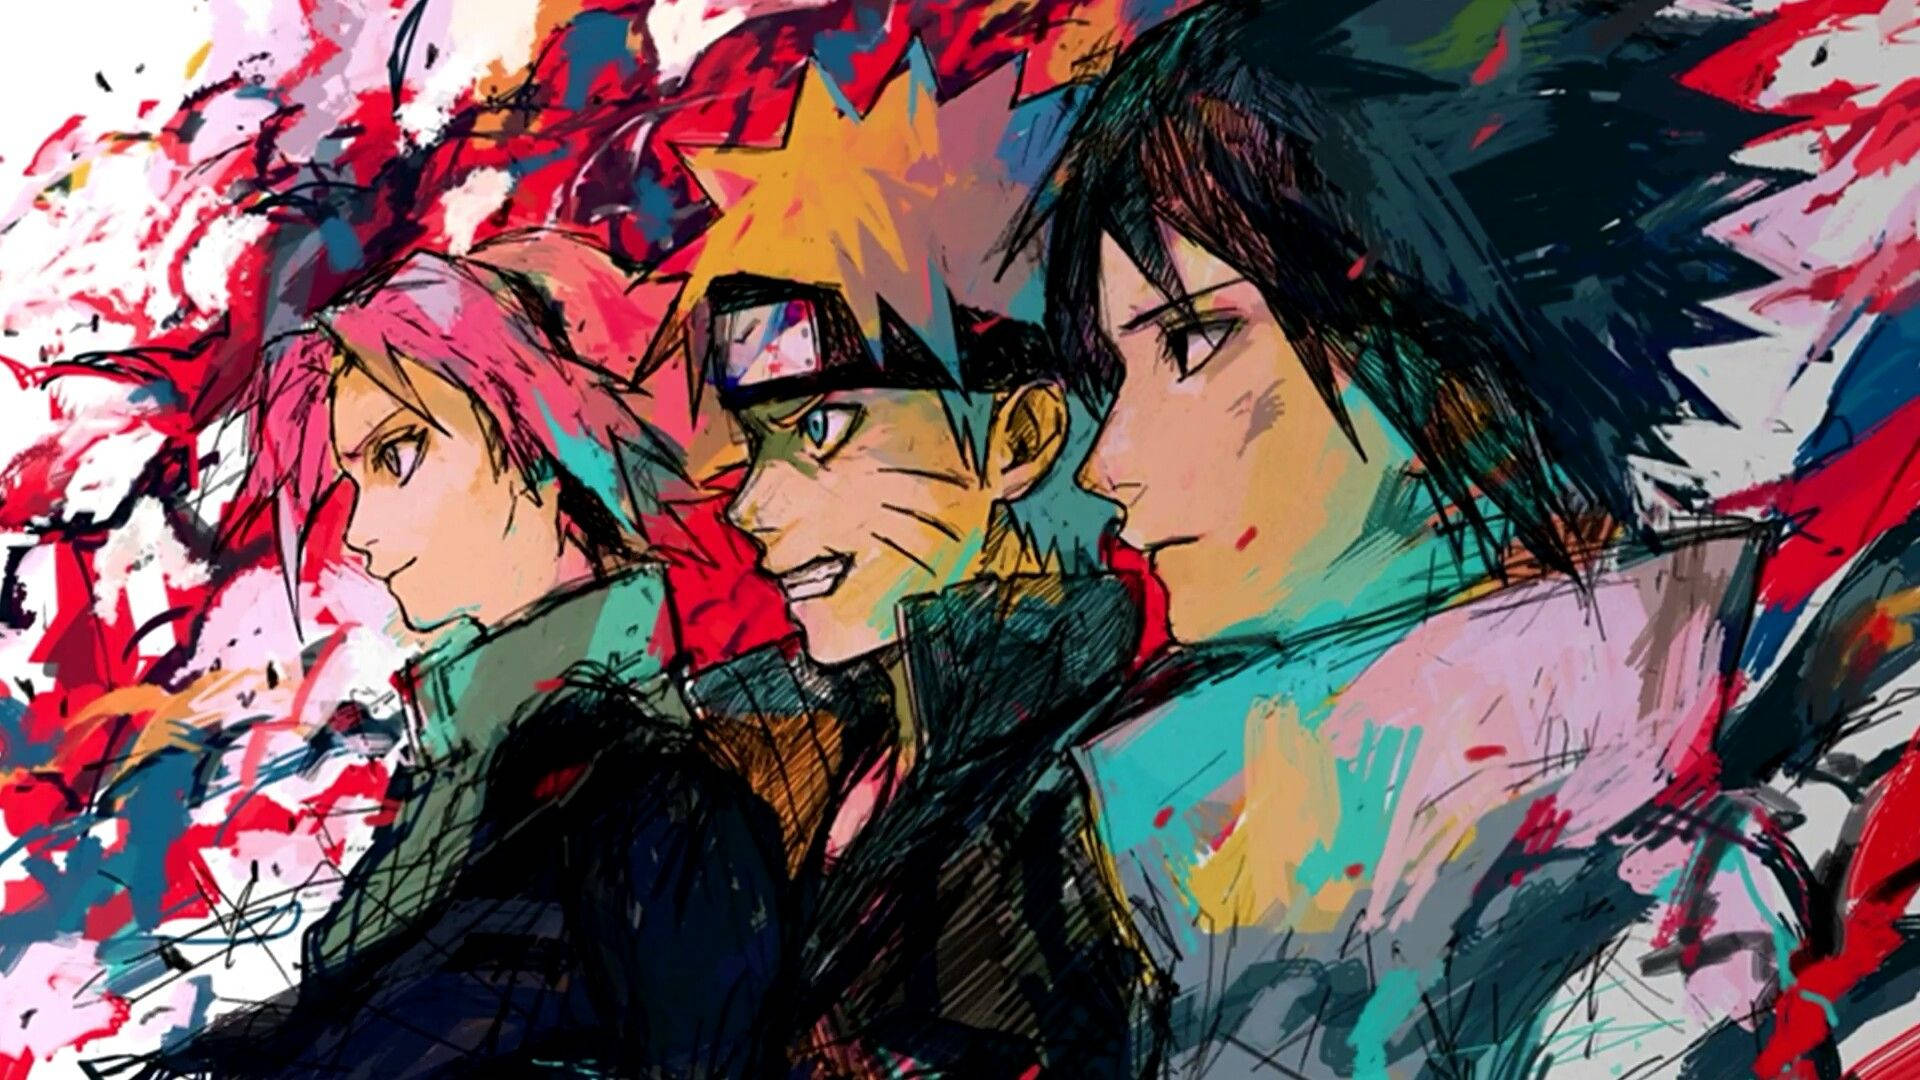 Free Anime 4k Wallpaper Downloads, [100+] Anime 4k Wallpapers for FREE |  